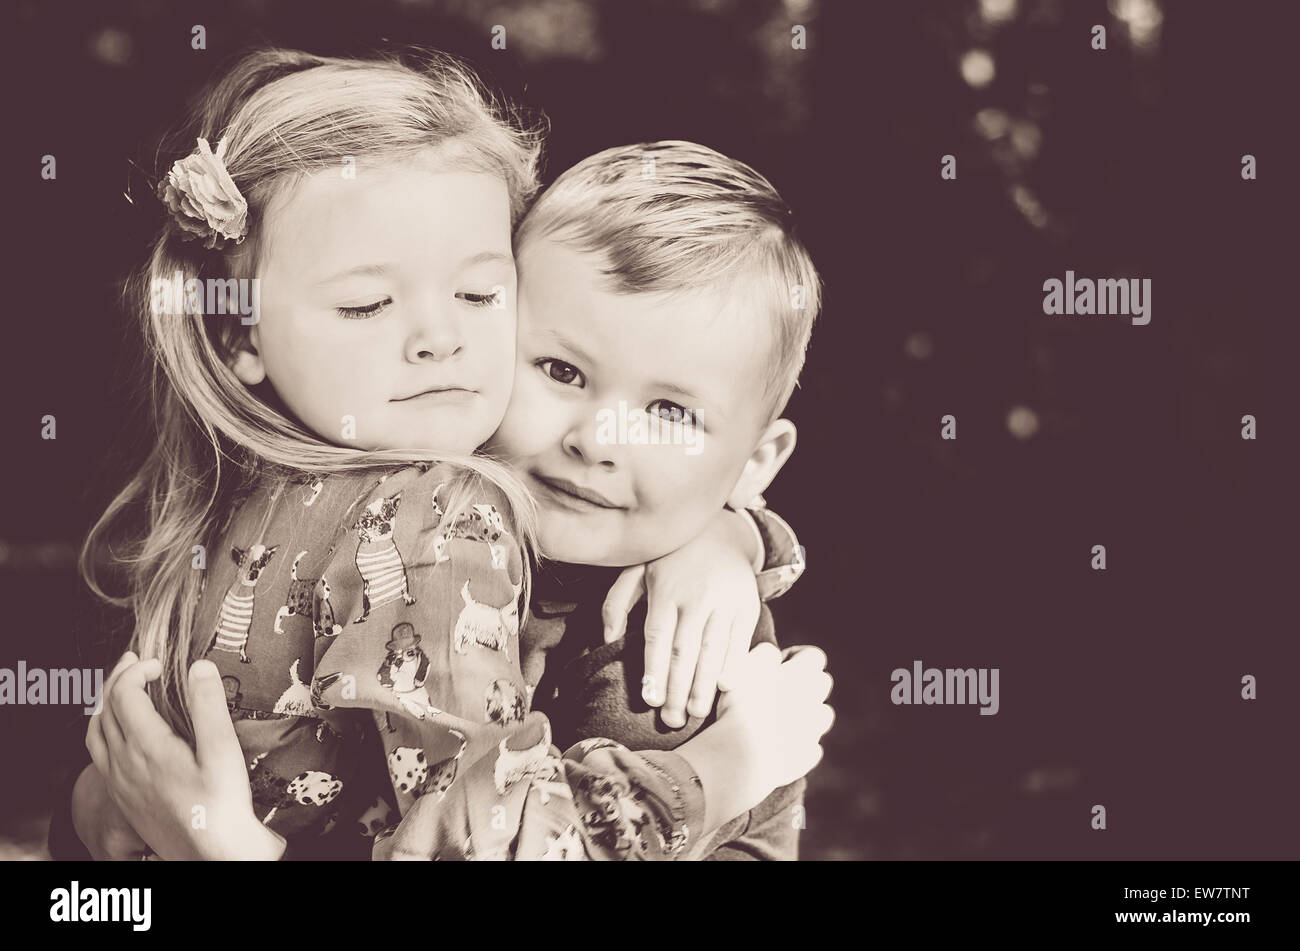 Girl and boy hugging Stock Photo